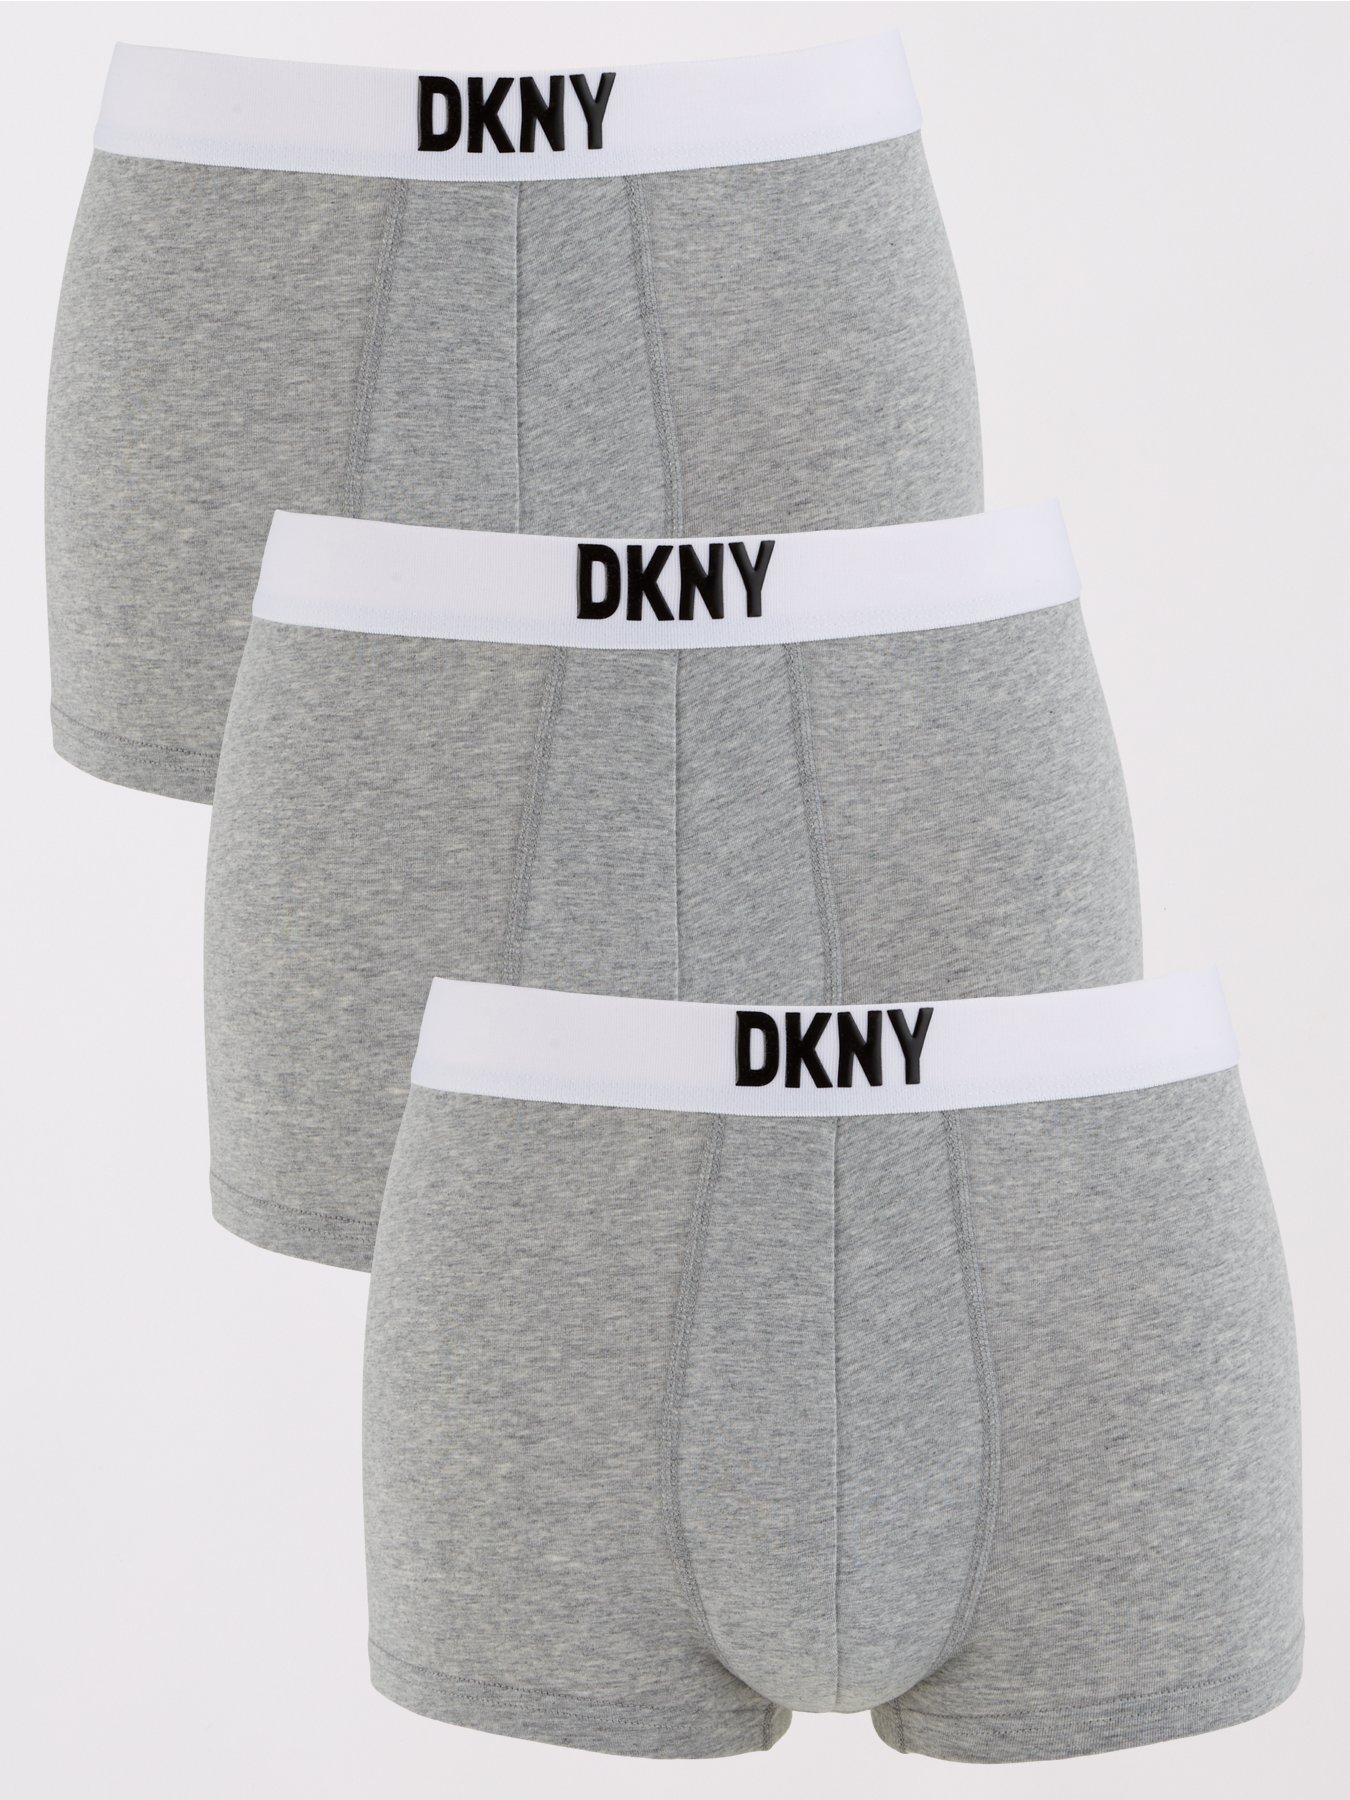 DKNY 3 Pack Lawrence Trunks - Grey | very.co.uk